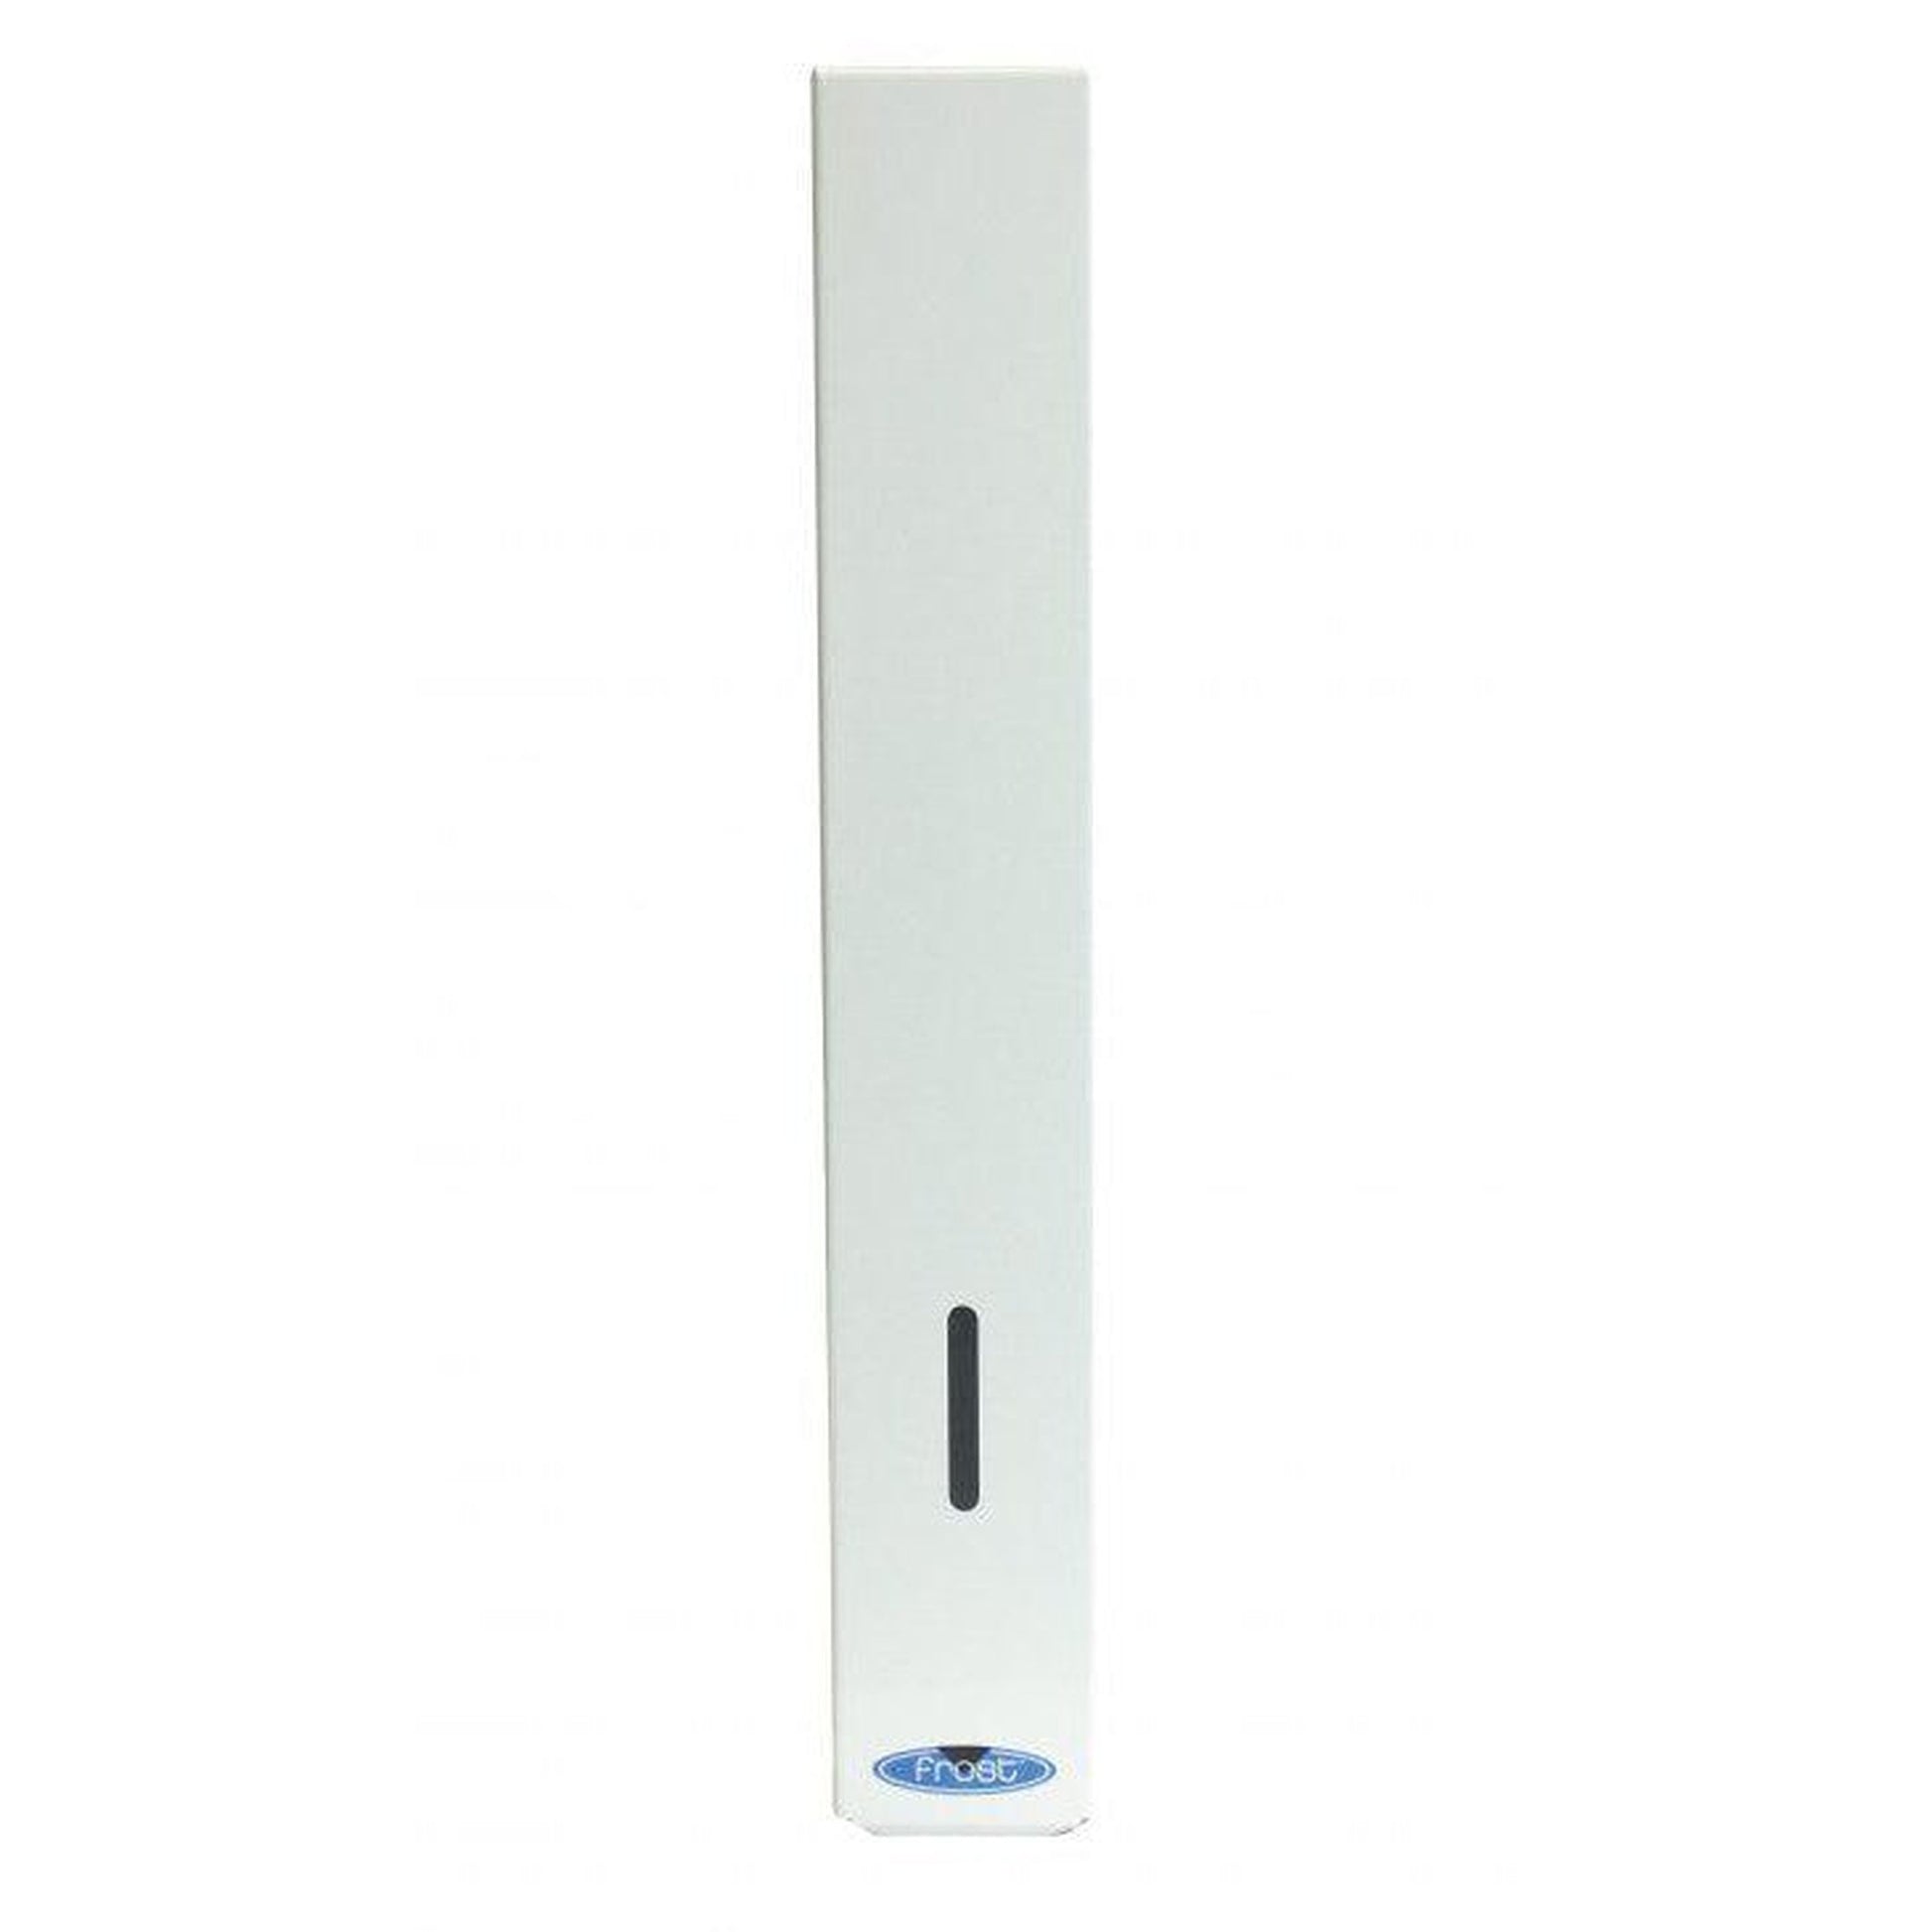 Frost 2.75 x 18.25 x 2.75 White Epoxy Powder Paper Product Dispenser